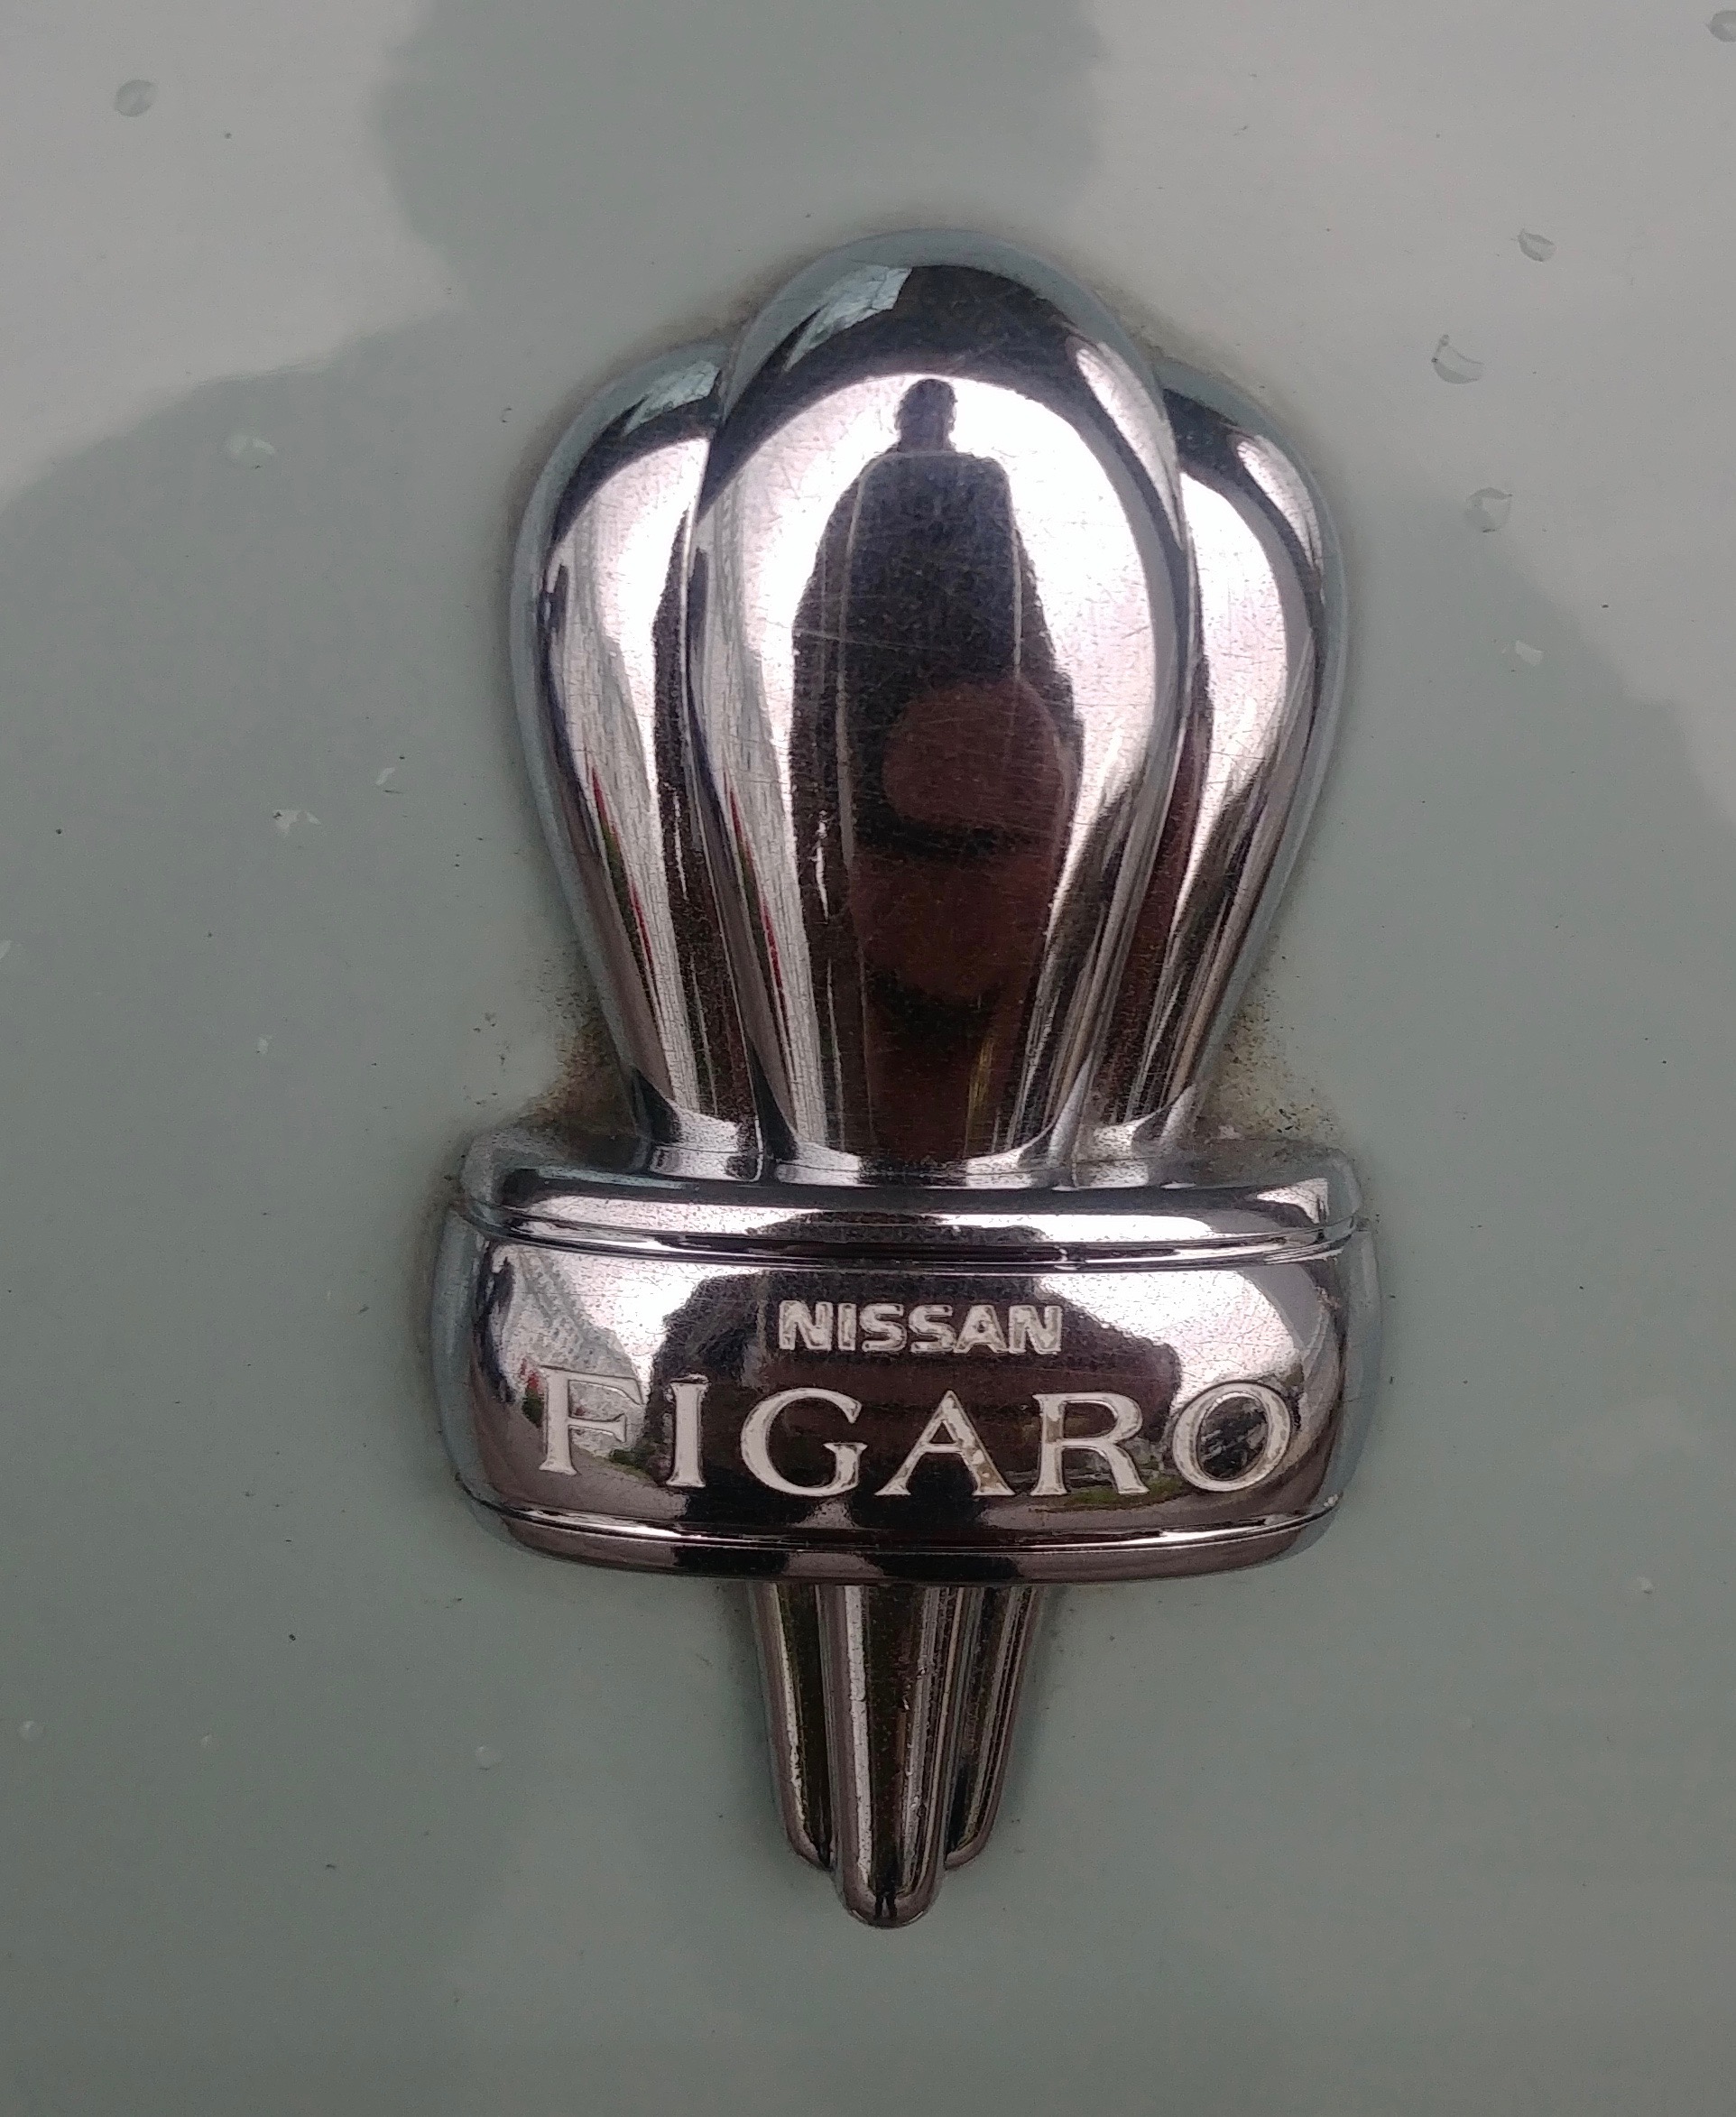 Nissan Figaro, Driven: 1990 Nissan Figaro, ClassicCars.com Journal